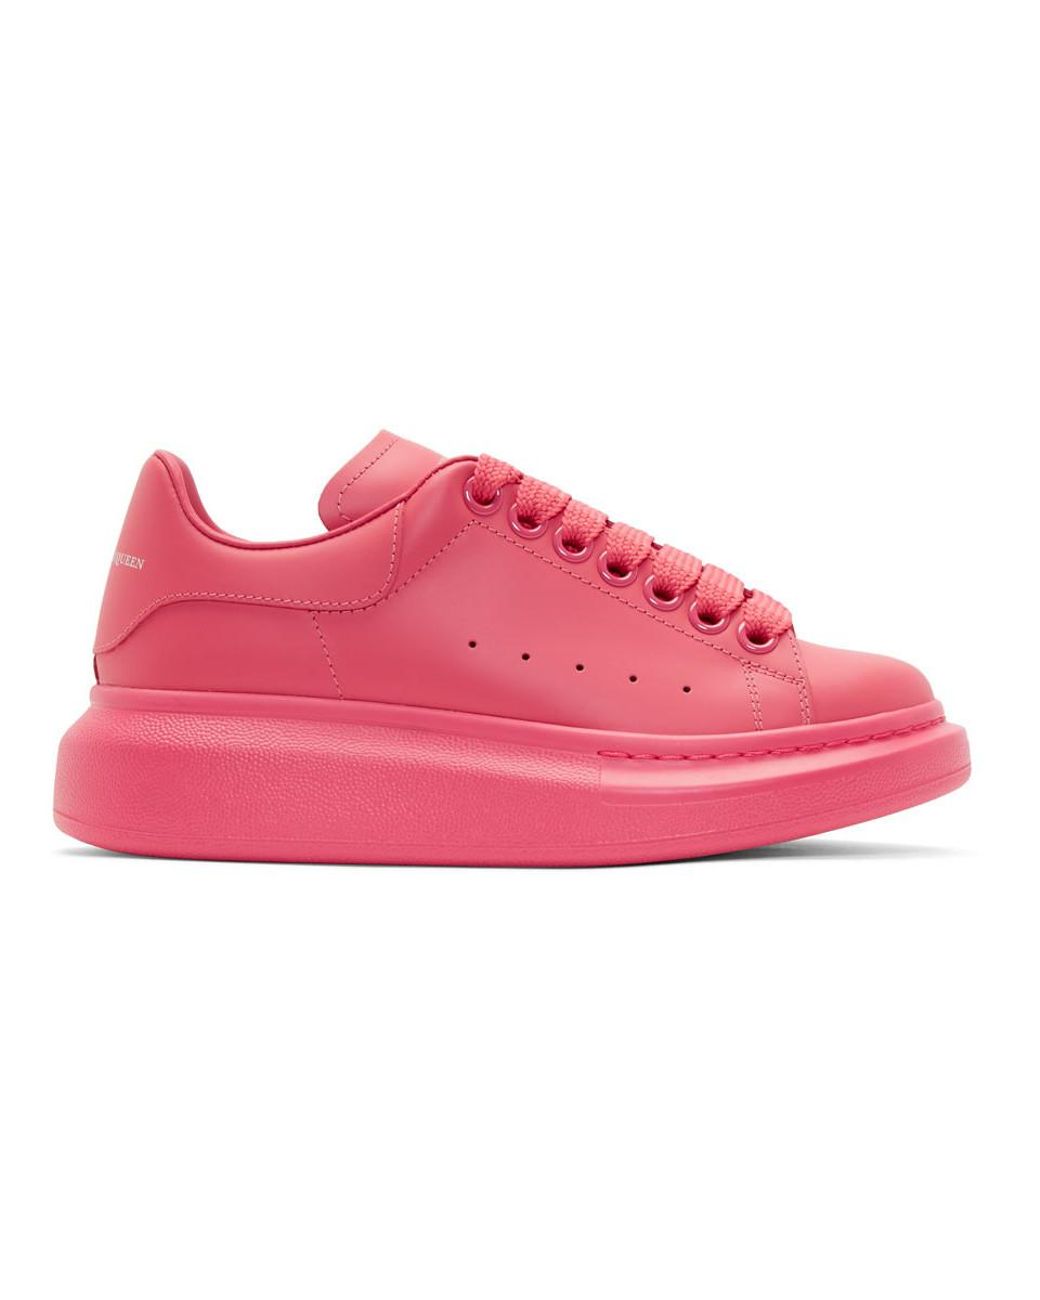 Oversized Sneaker in White/Shock Pink